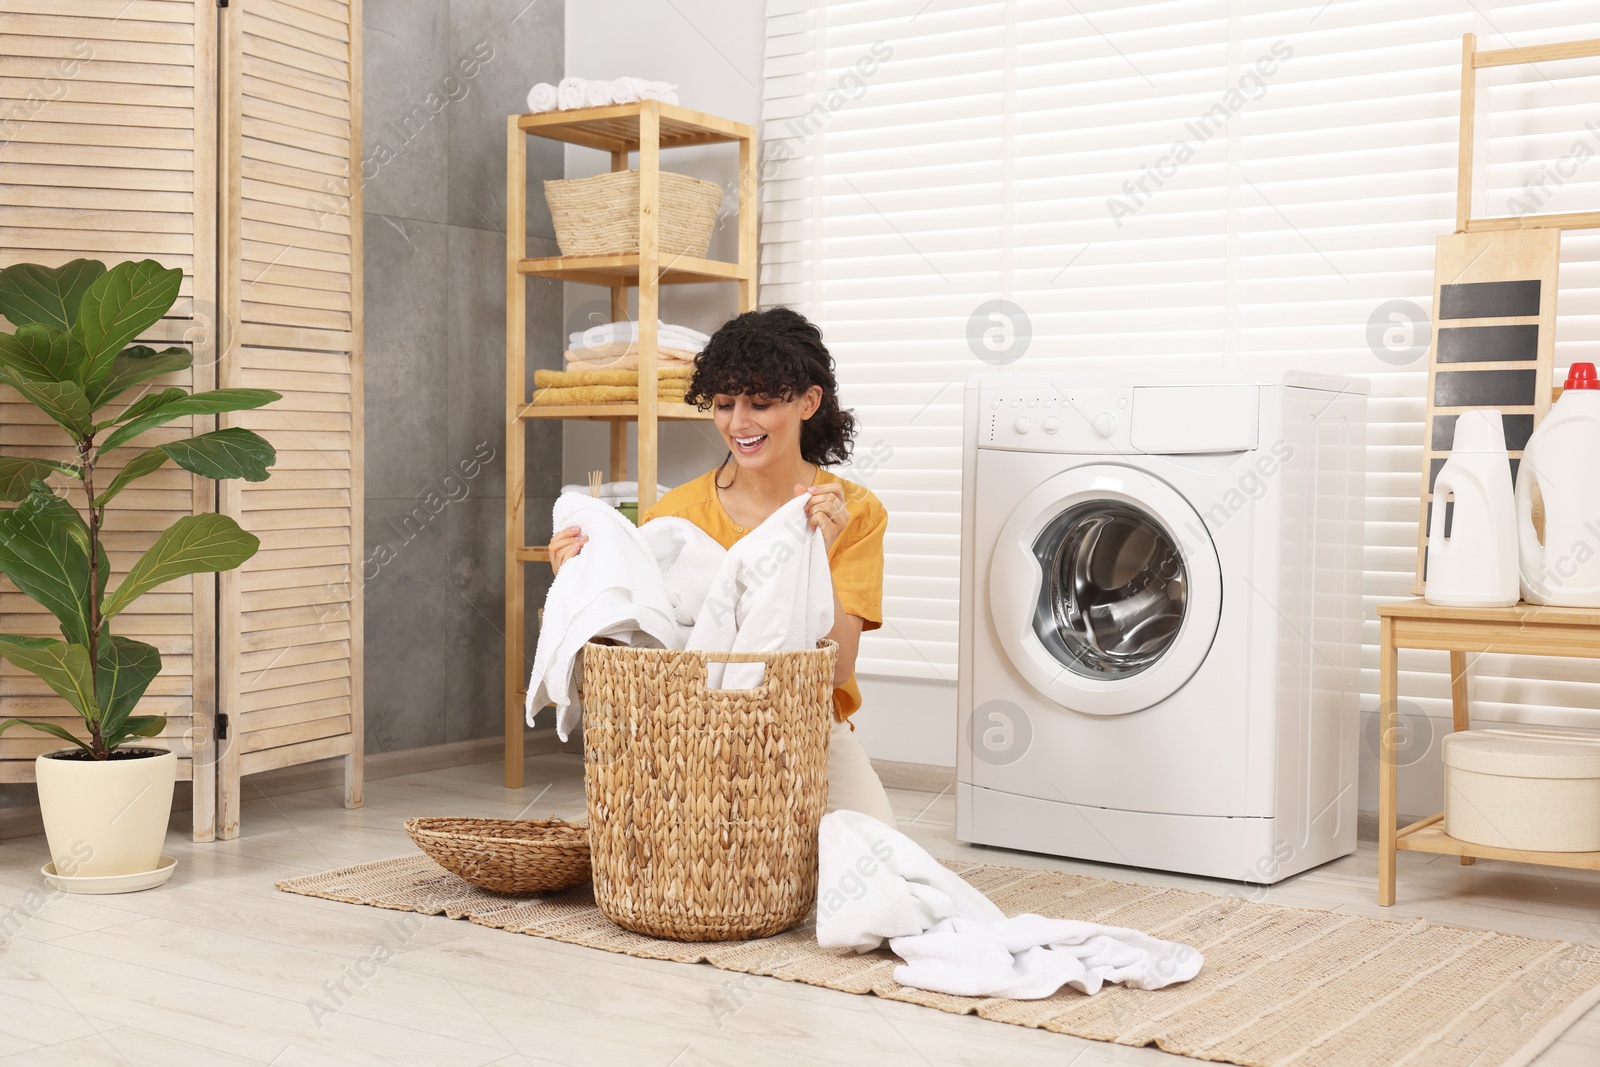 Photo of Happy woman taking laundry from basket near washing machine indoors